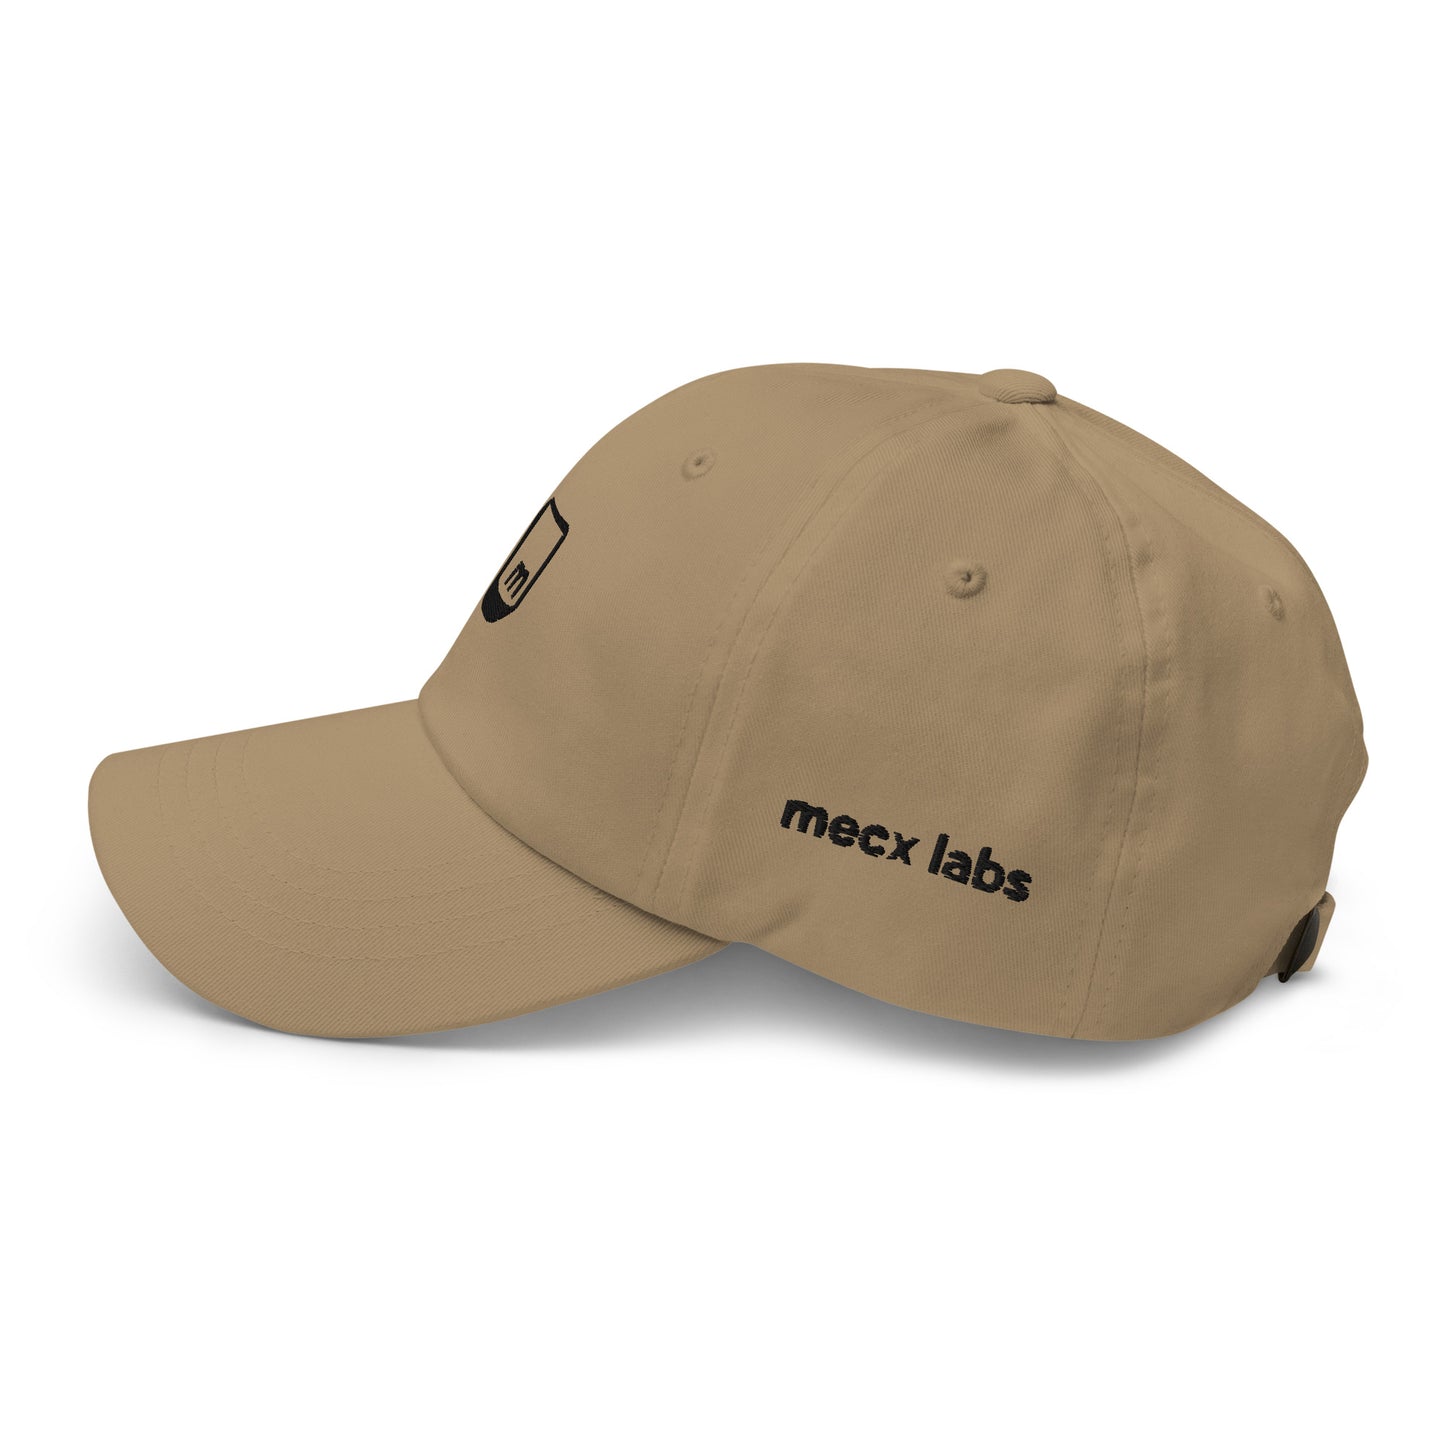 Mecx Labs Compact Logo Dad Hat